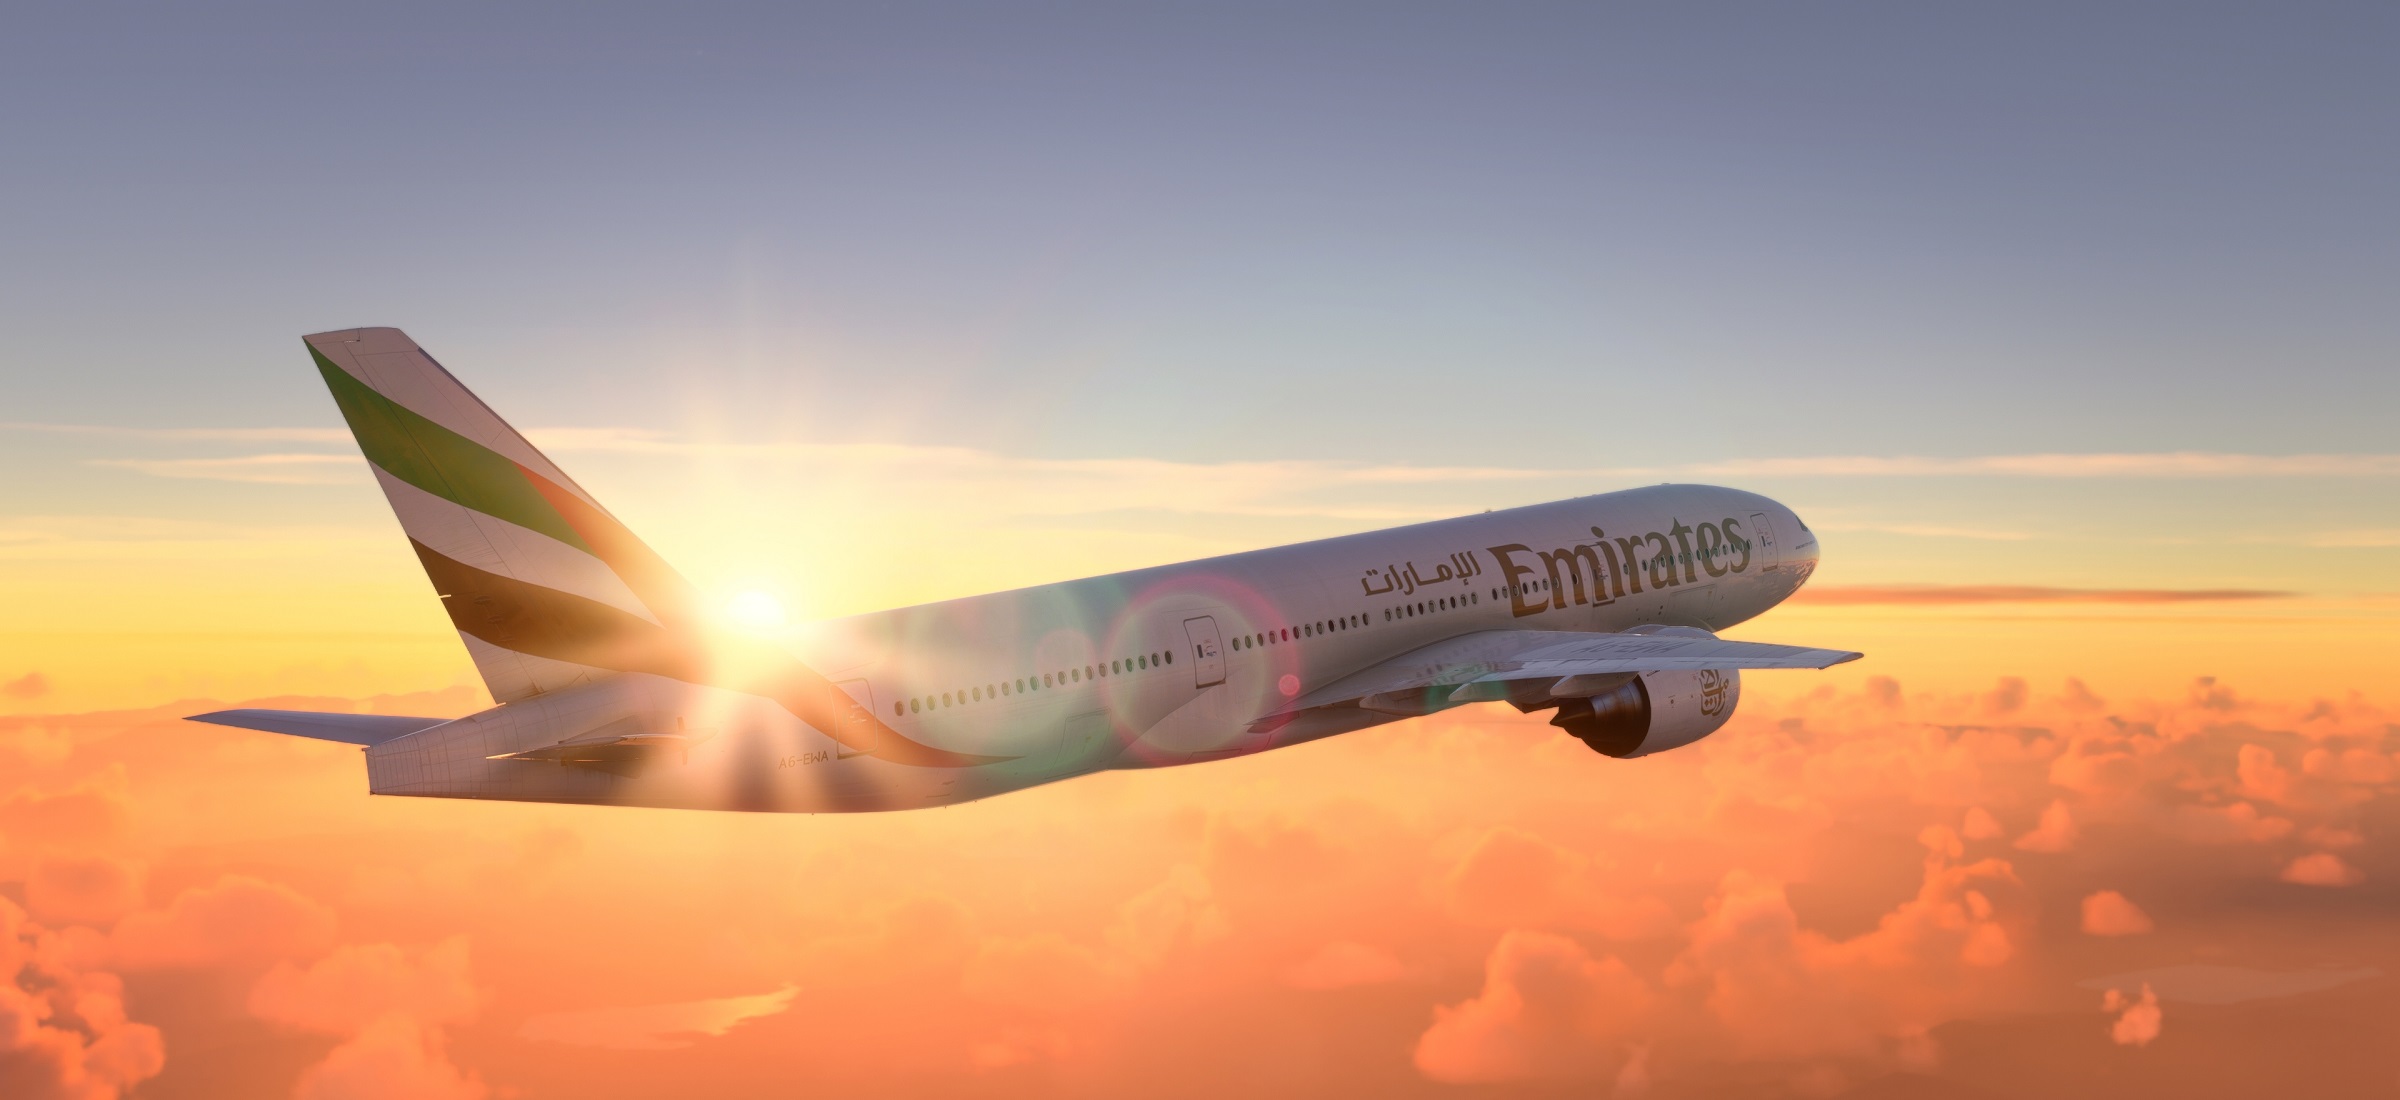 emirates-wifi-samolot-shutterstock.jpg